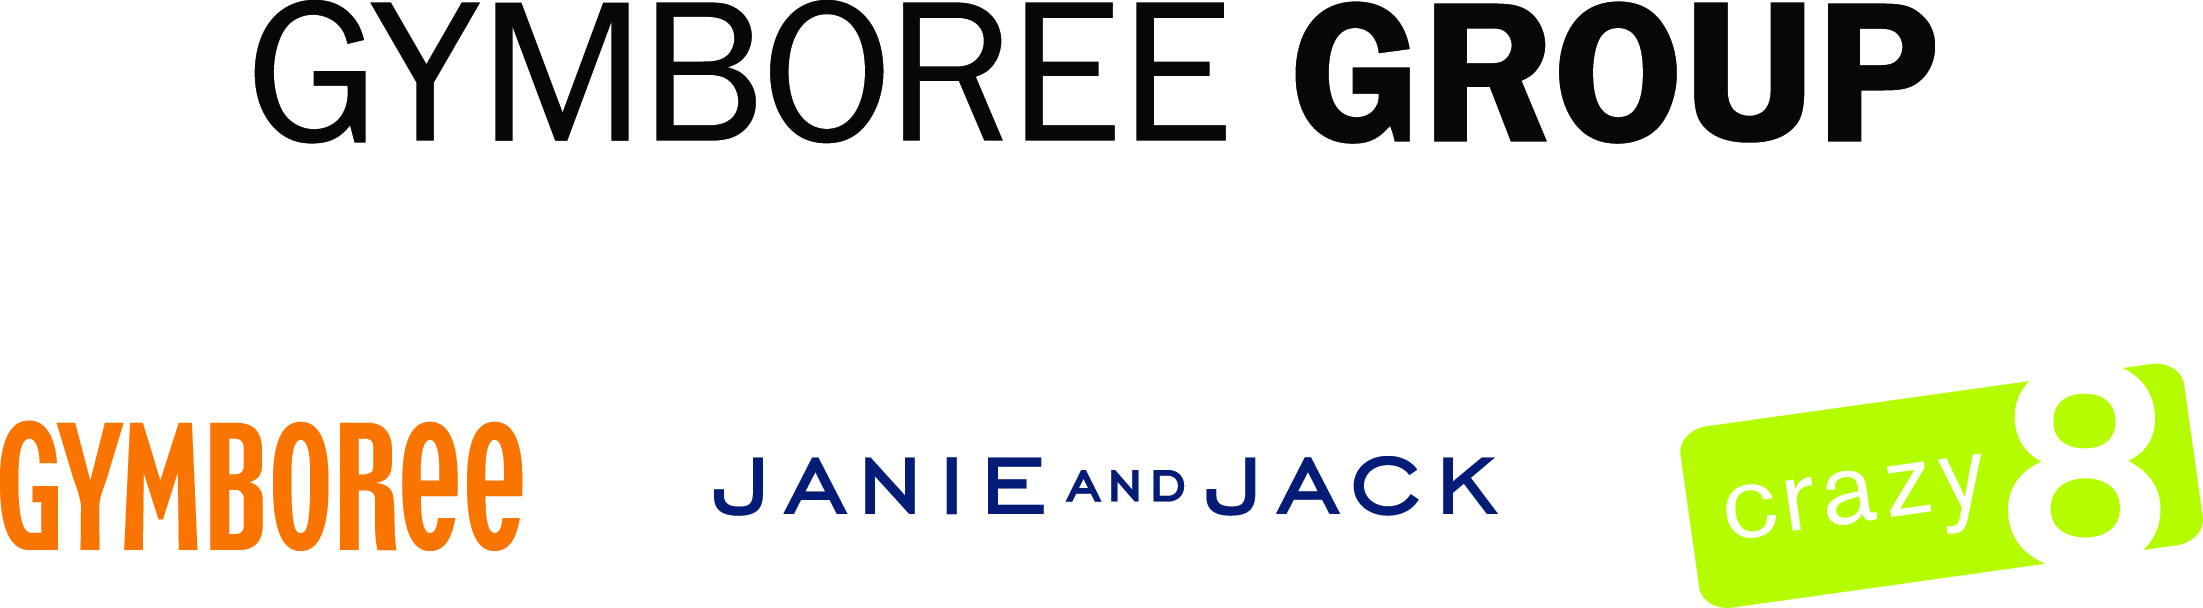 Gymboree Group logo